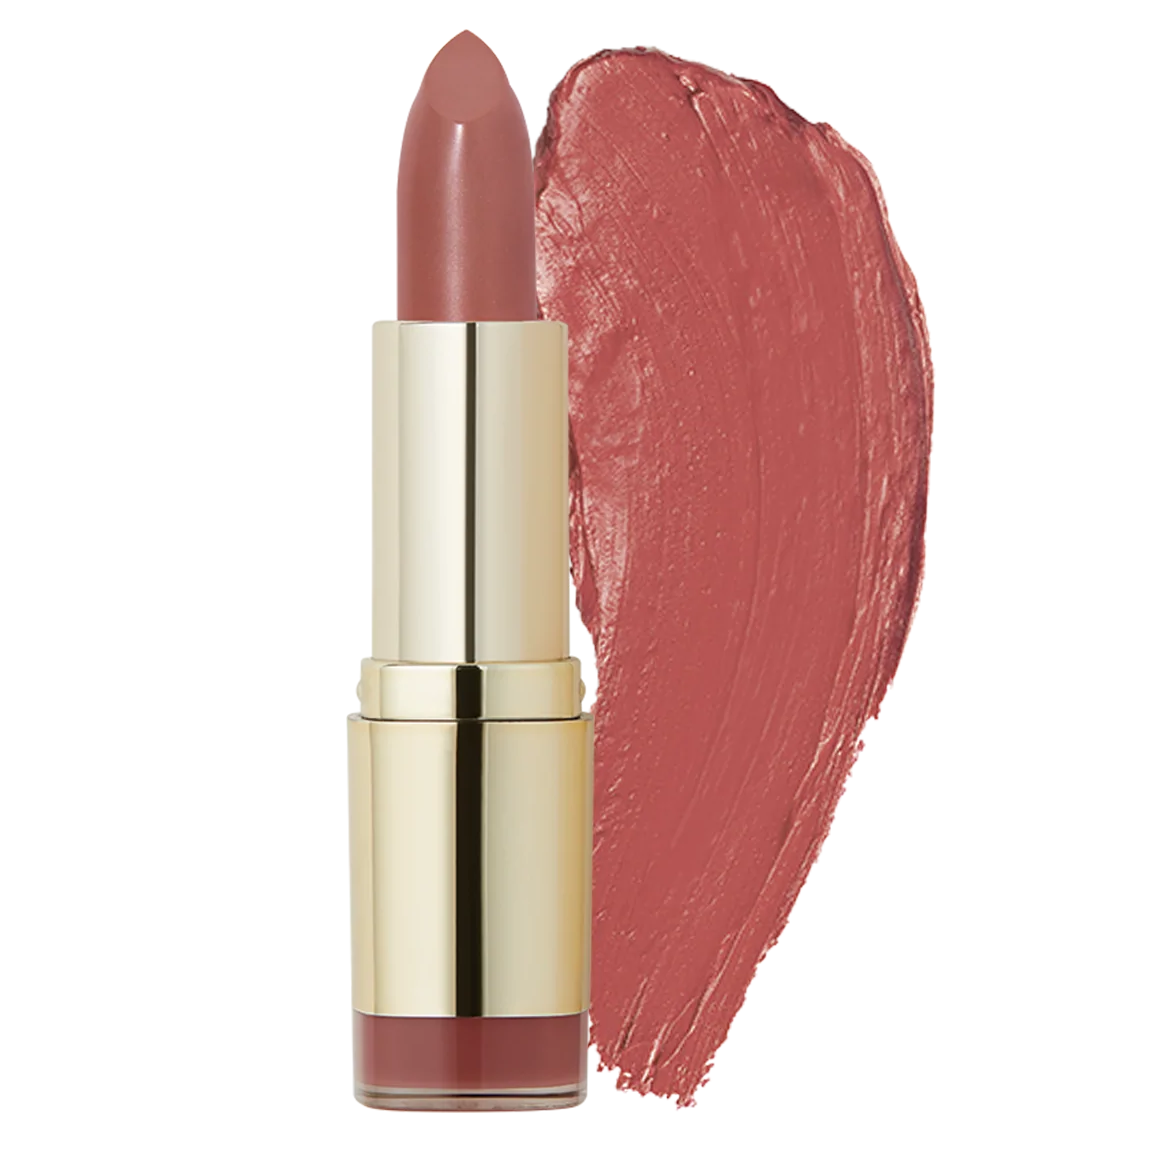 MILANI Color Statement Lipstick - Naturally Chic #25